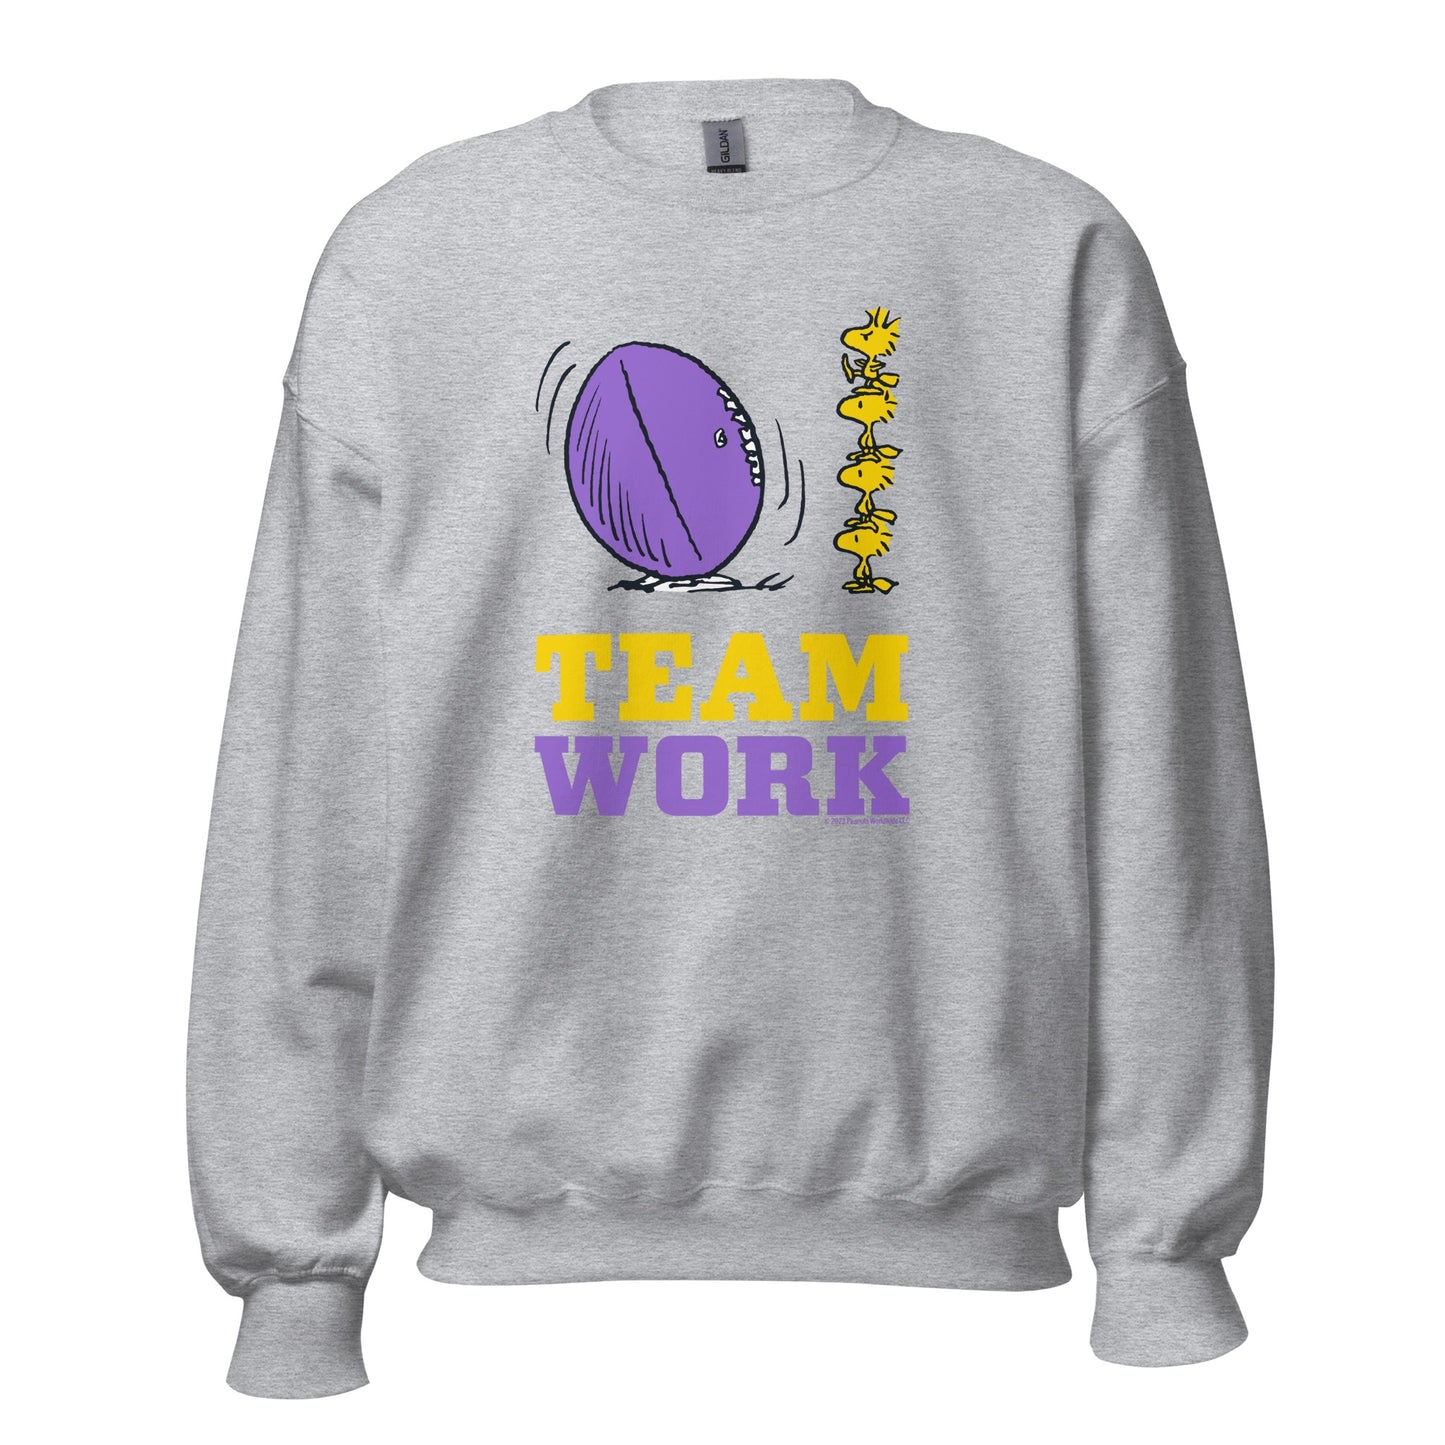 Woodstock Teamwork Adult Sweatshirt